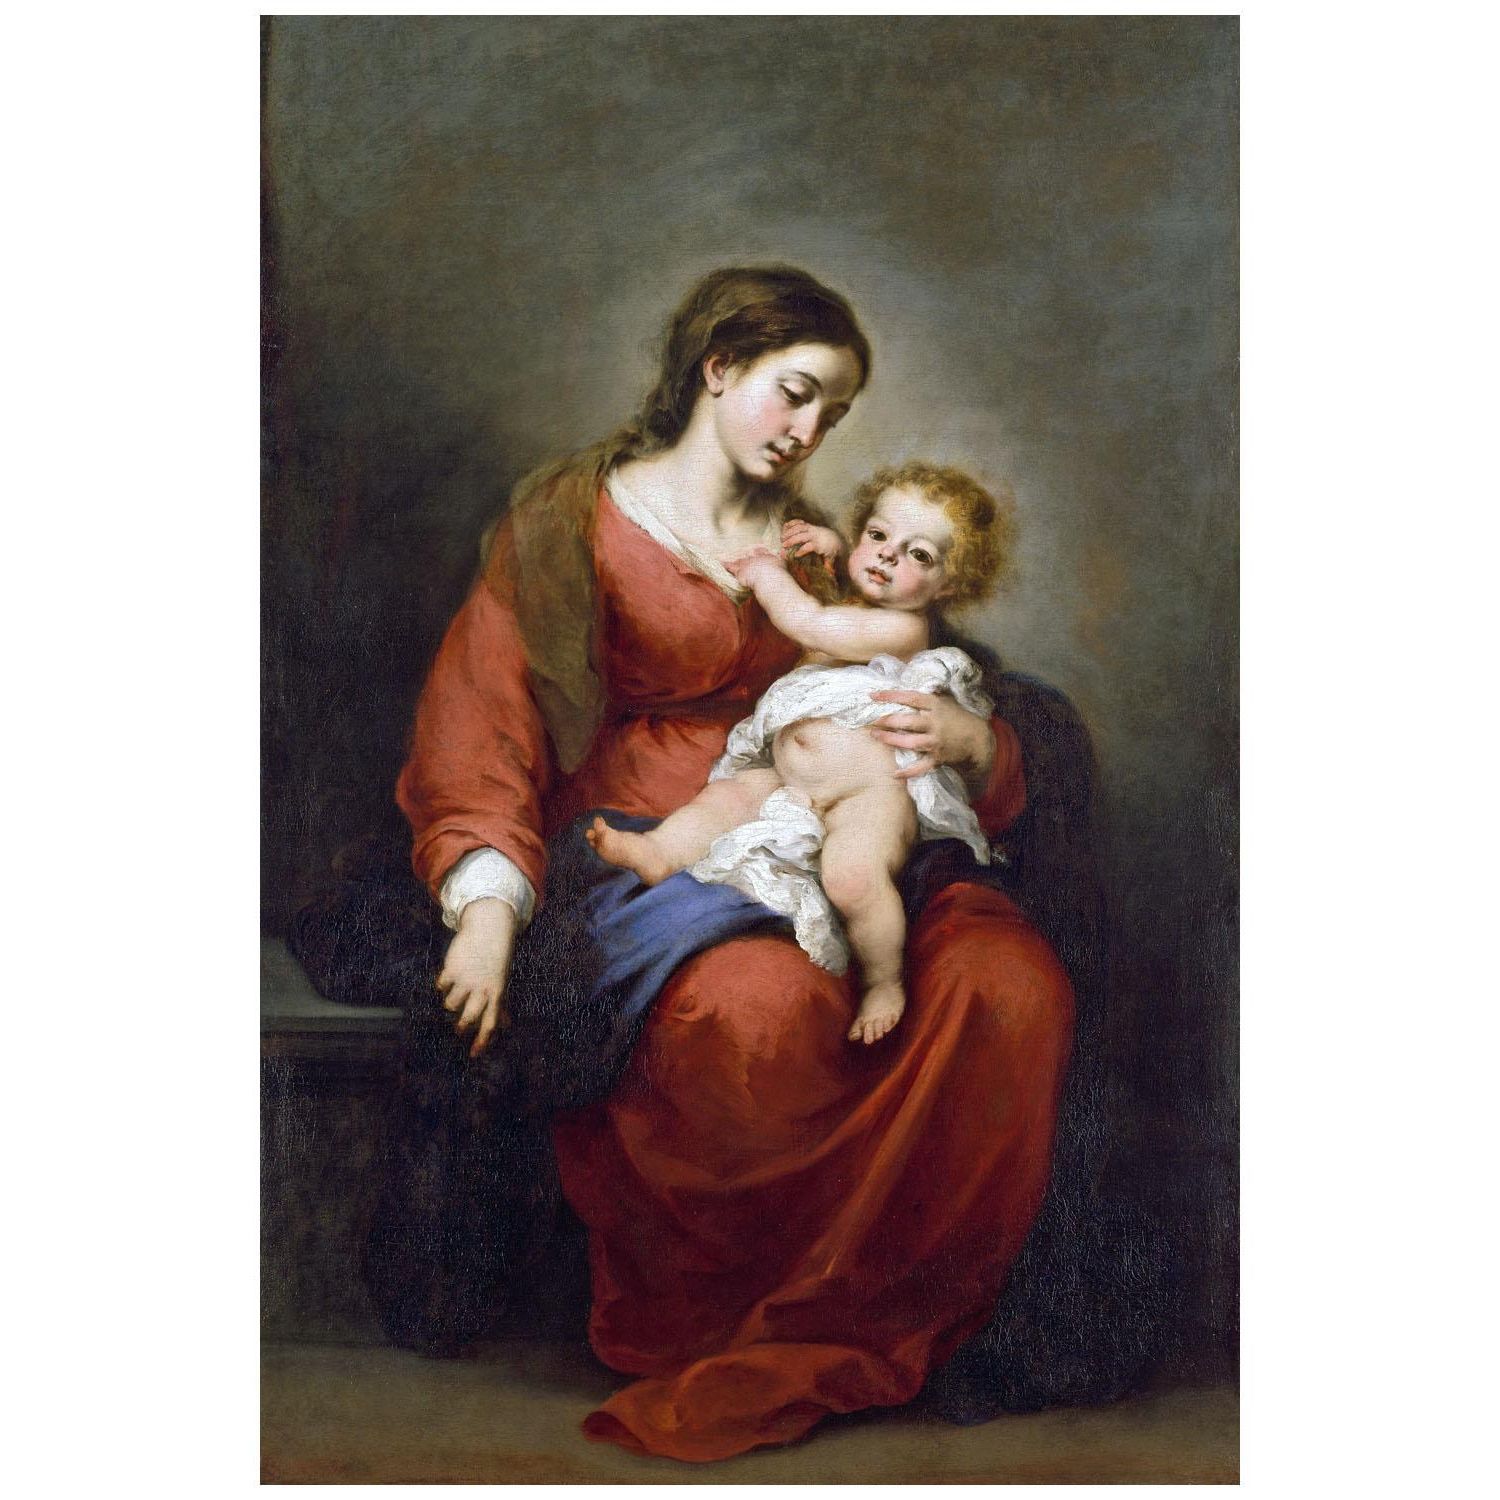 Bartolome Esteban Murillo. Virgen y Niño. 1670. Museo Thyssen-Bornemisza Madrid